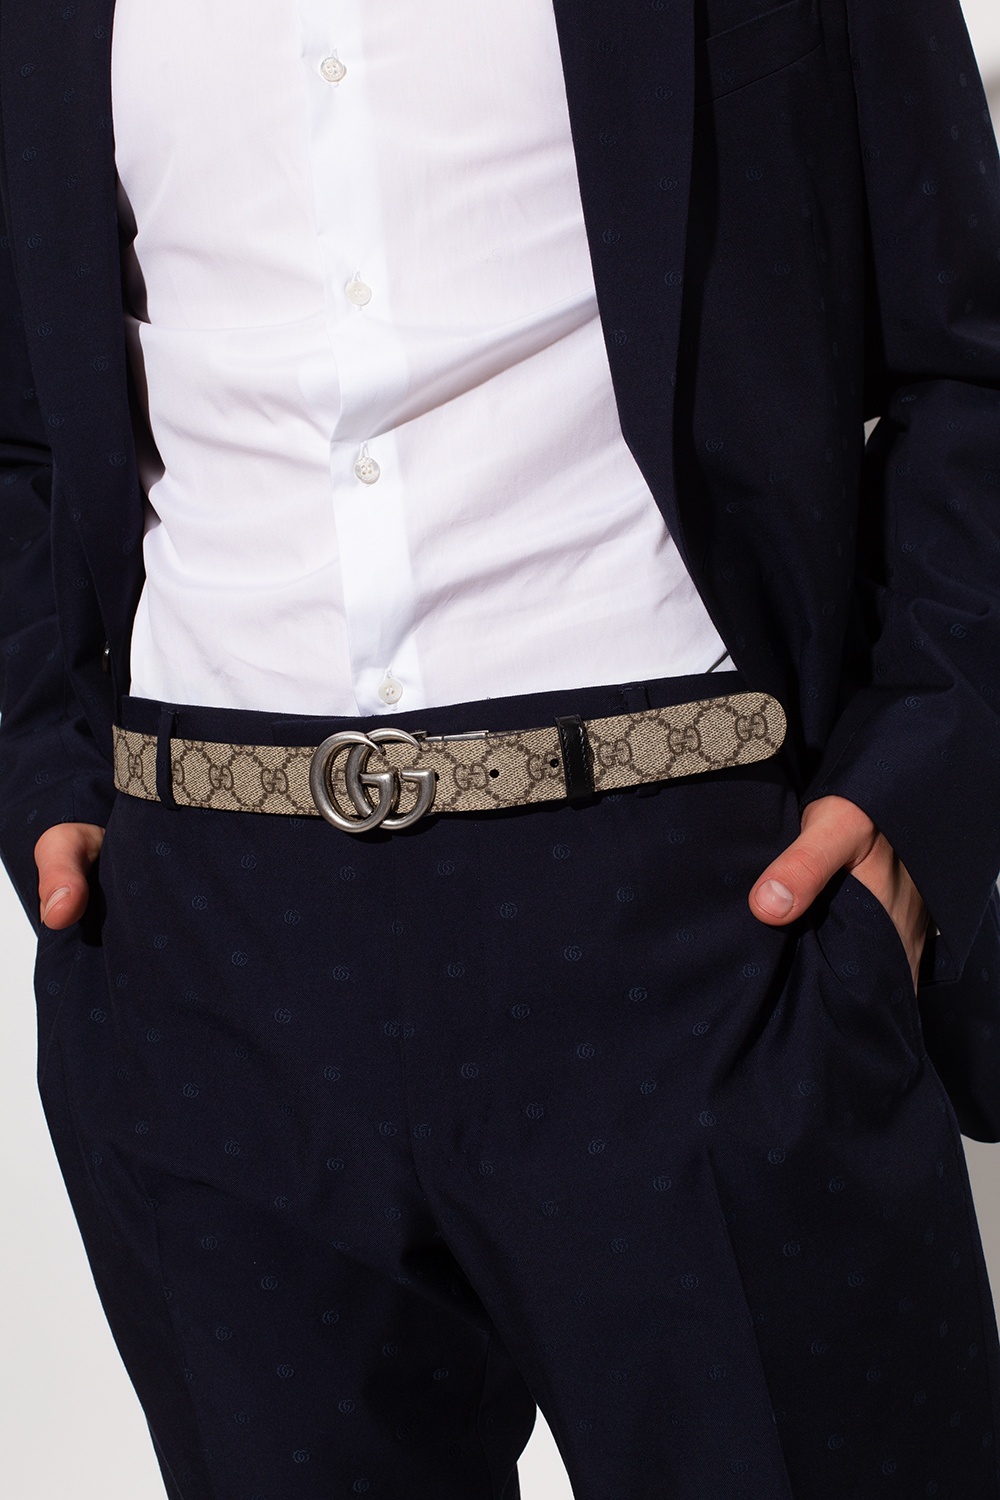 gucci belt with suit